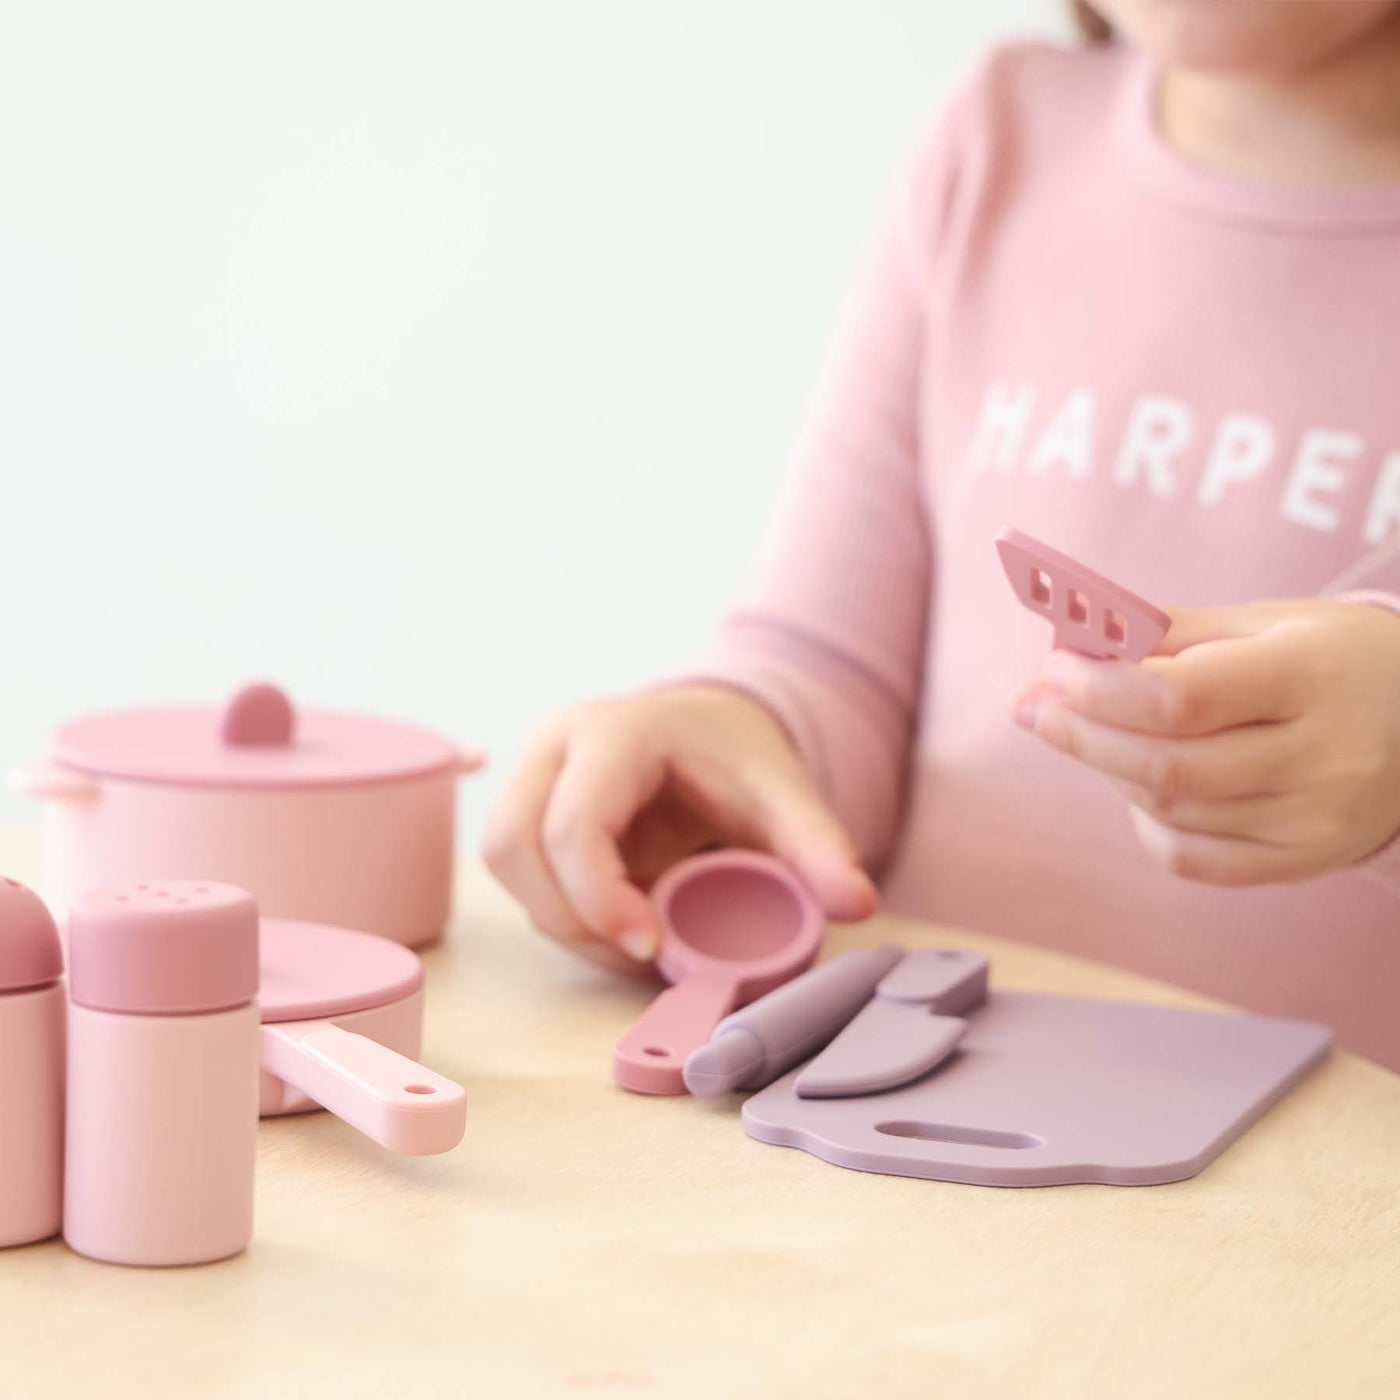 Buy Toddler Utensils, Easy to Use Toddler Silverware Set, Made in Korea, BPA-Free, Toddler Forks & Spoons, Baby Utensils 6-12 Months